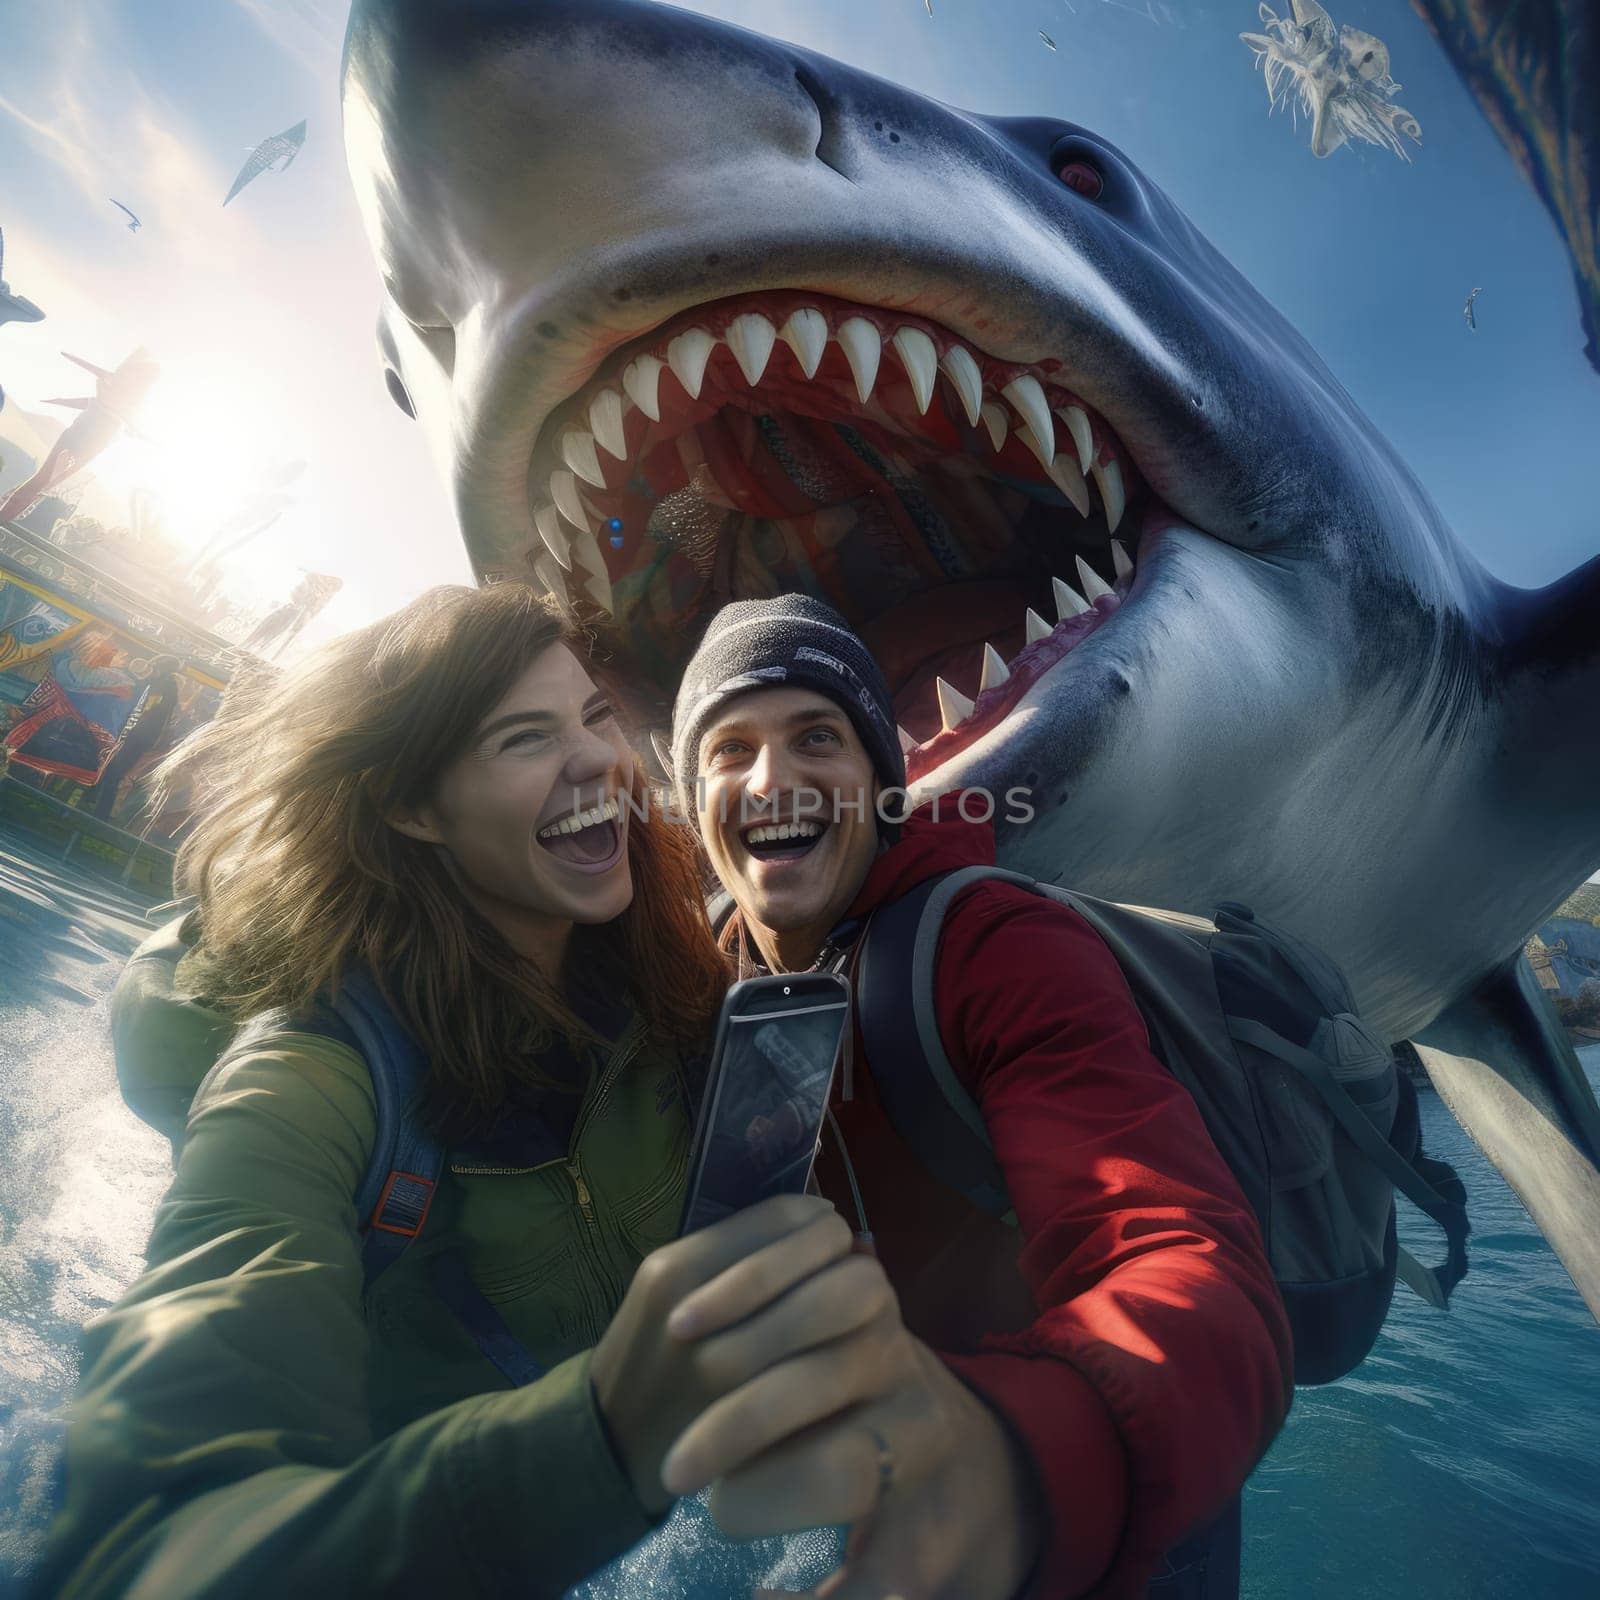 Joyful people take selfies with a huge shark. Rest